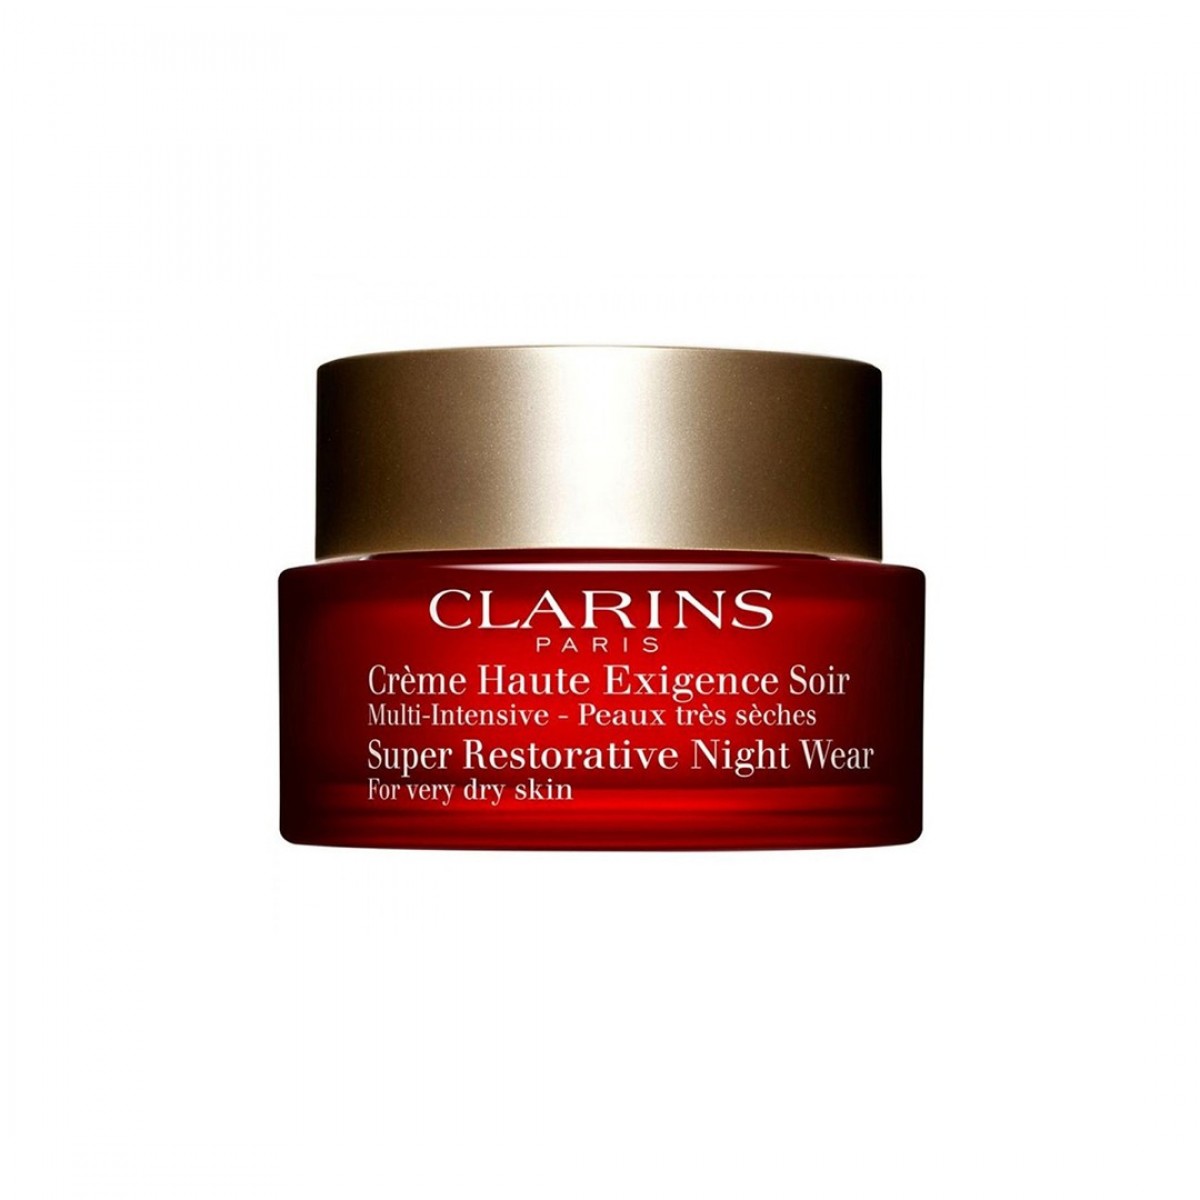 Super Restorative Night Cream for Very dry skin